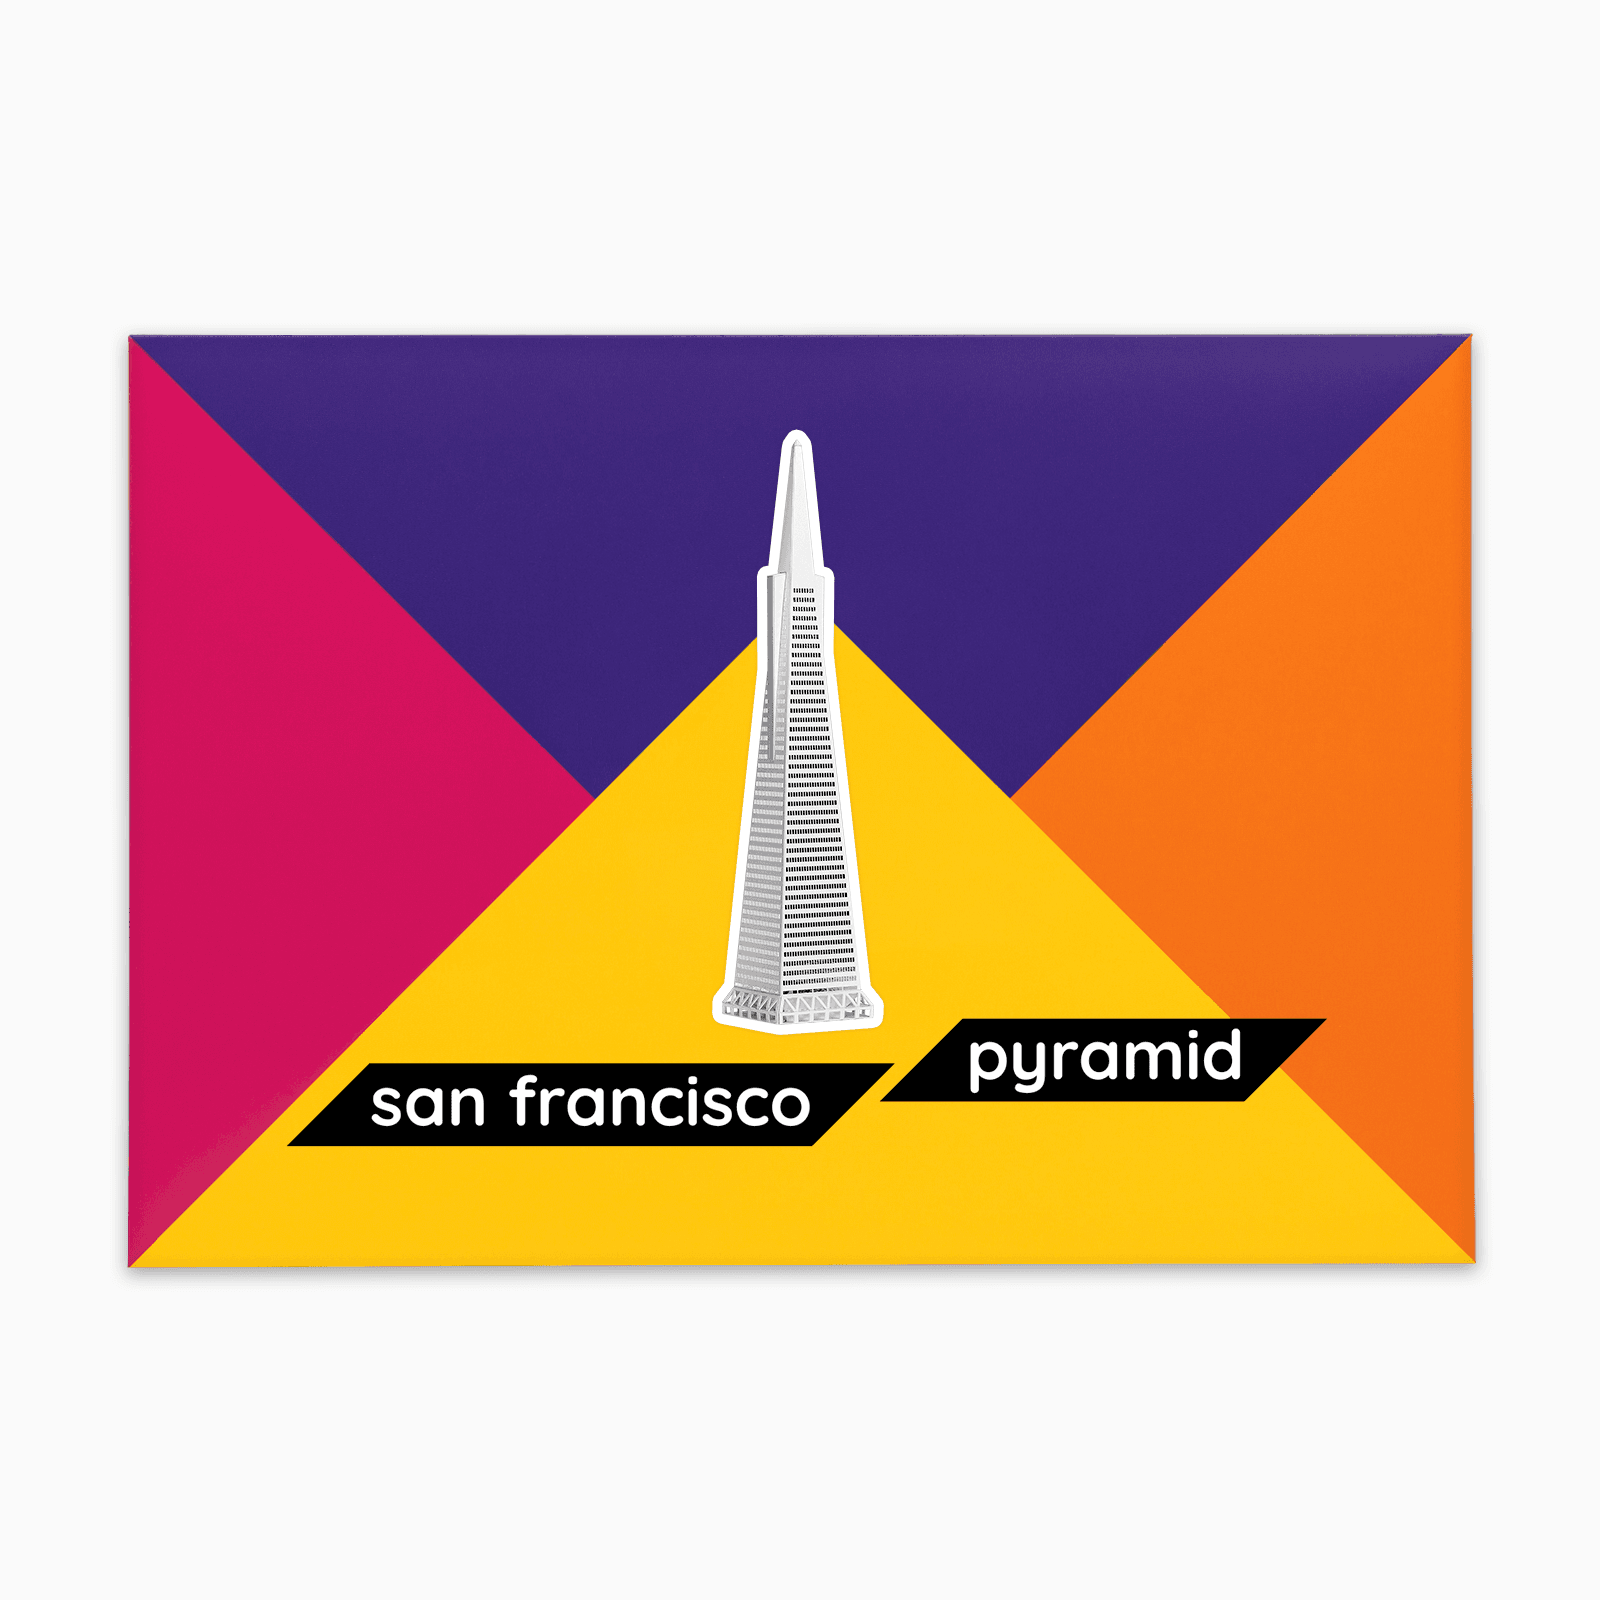 PaperLandmarks San Francisco Pyramid Transamerica Building Paper Model Kit Gift Packaging